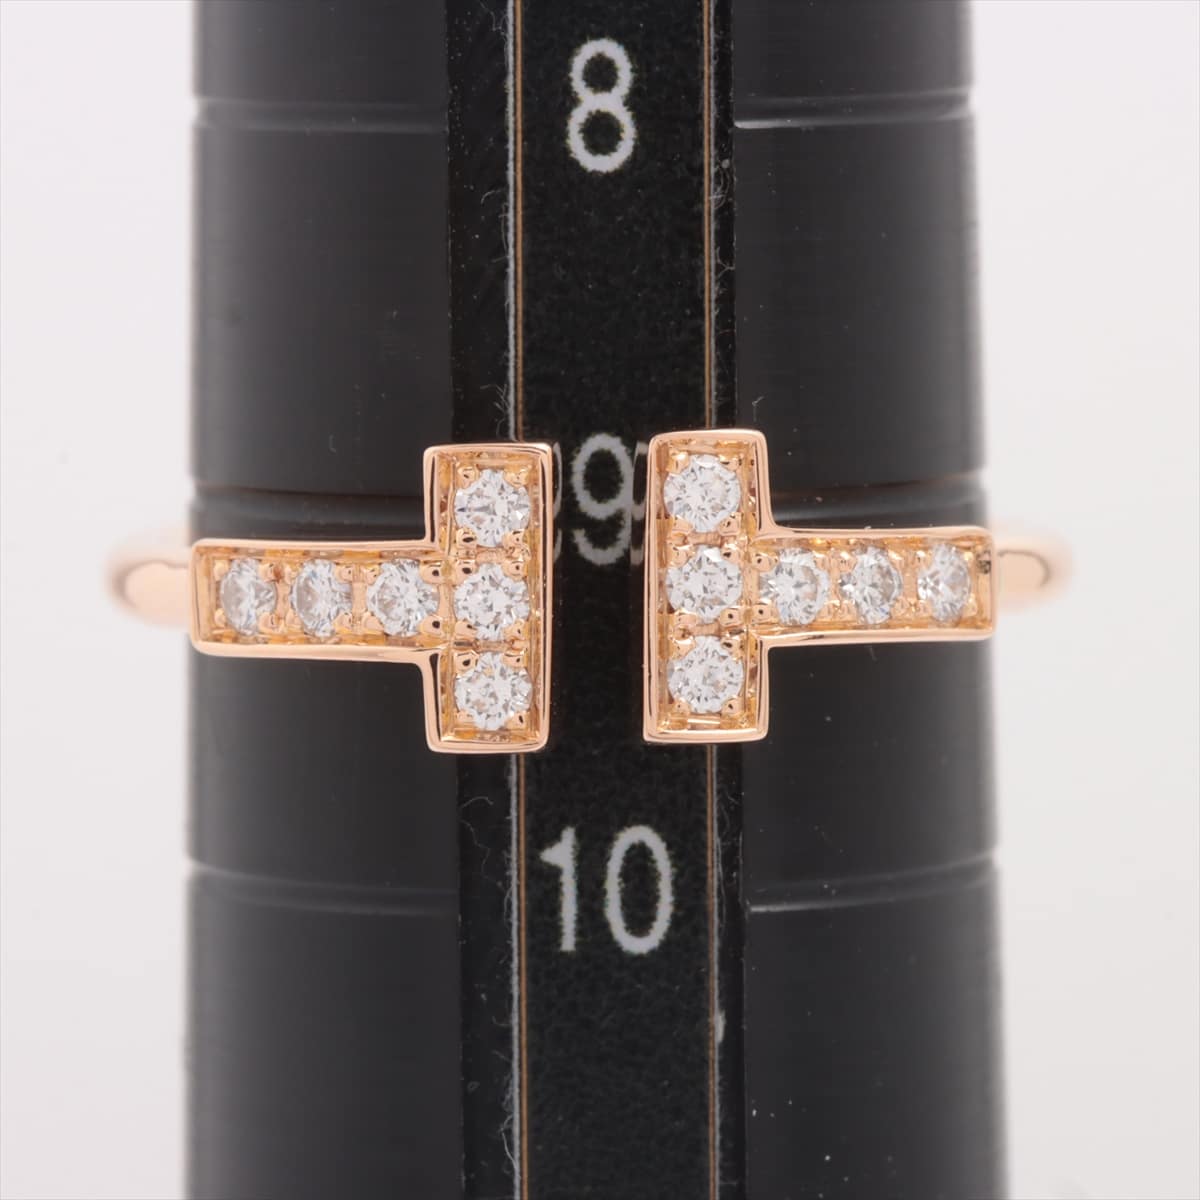 Tiffany T Wire diamond rings 750(PG) 2.5g